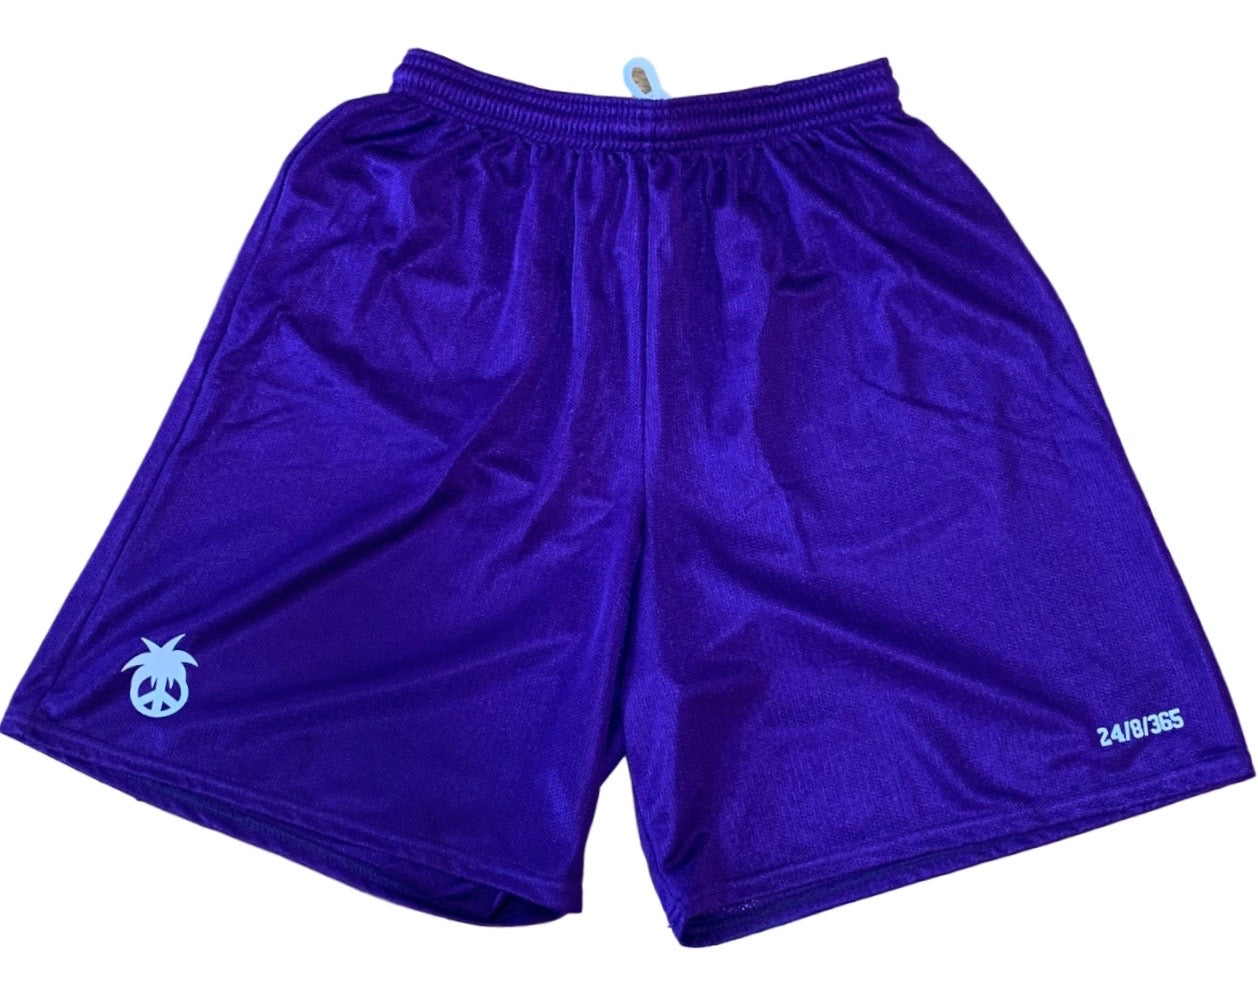 Lake Shorts - Purple